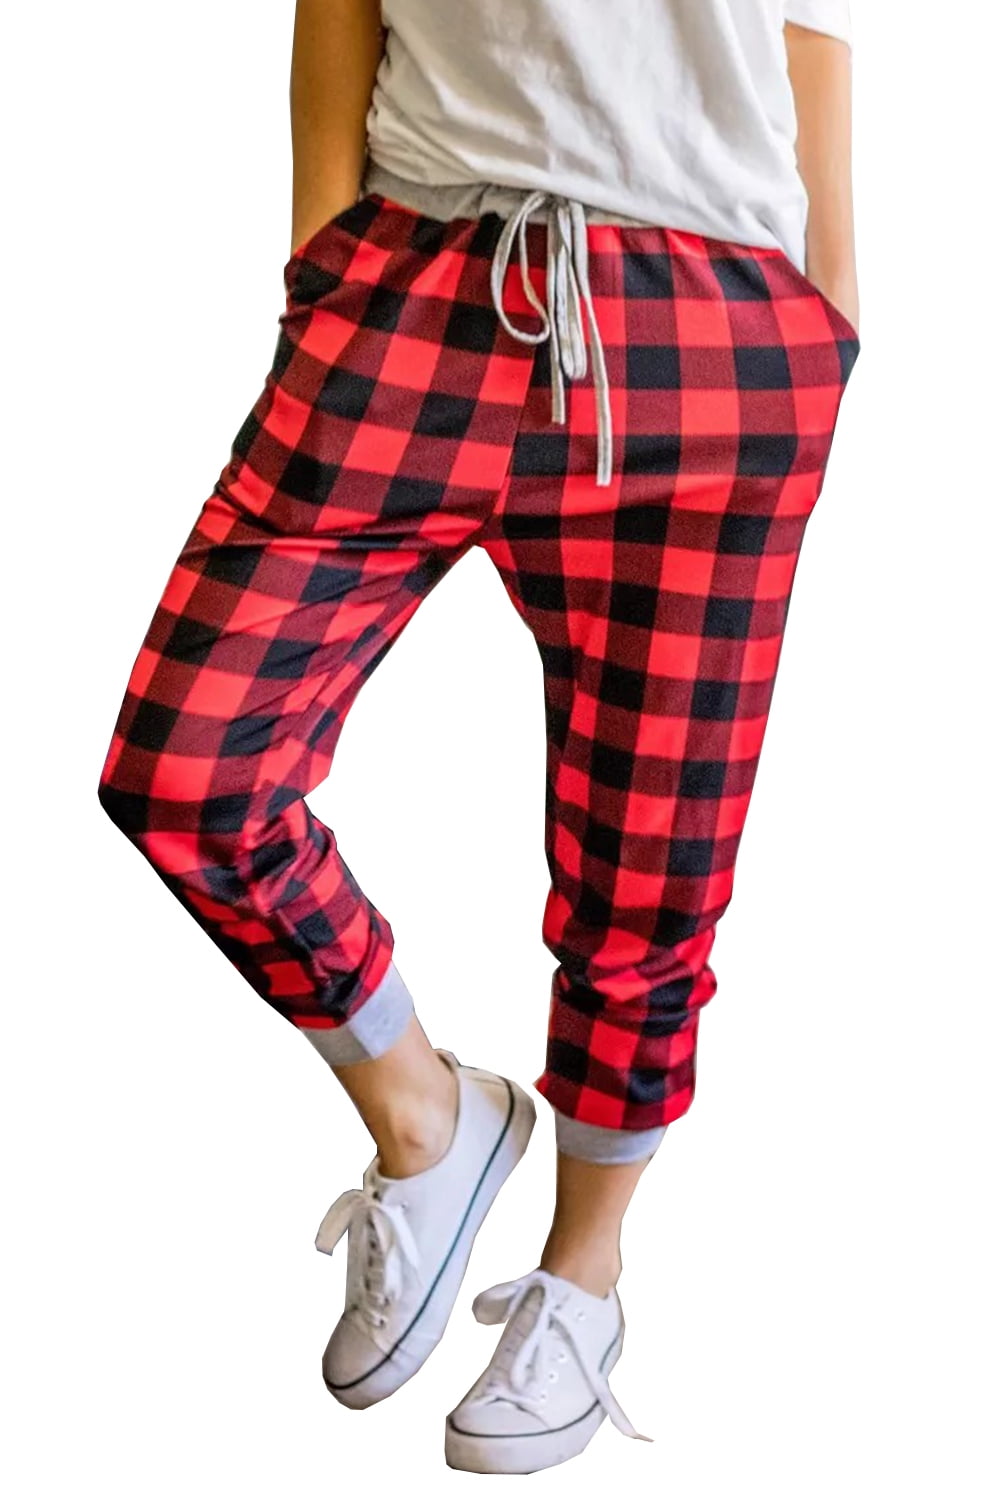 SySea - Womens Plaid Pajama Pants Casual Home Pants - Walmart.com ...